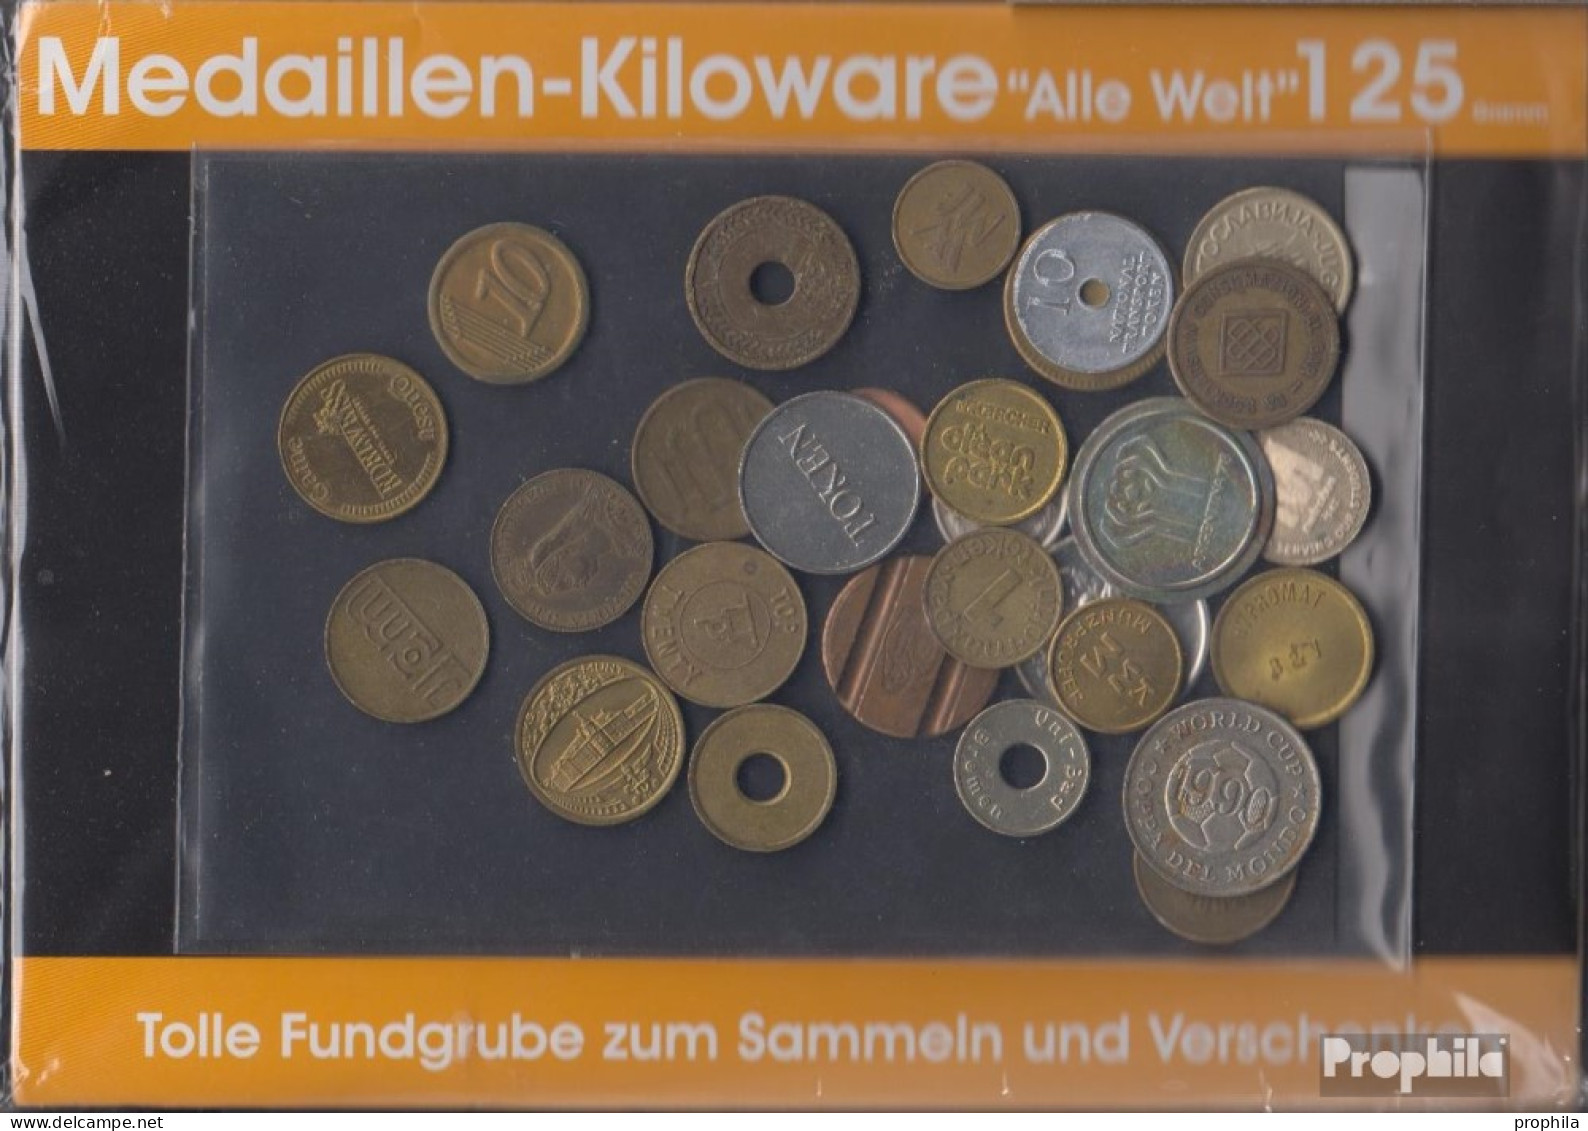 Alle Welt 125 Gramm Medaillenkiloware - Kiloware - Münzen